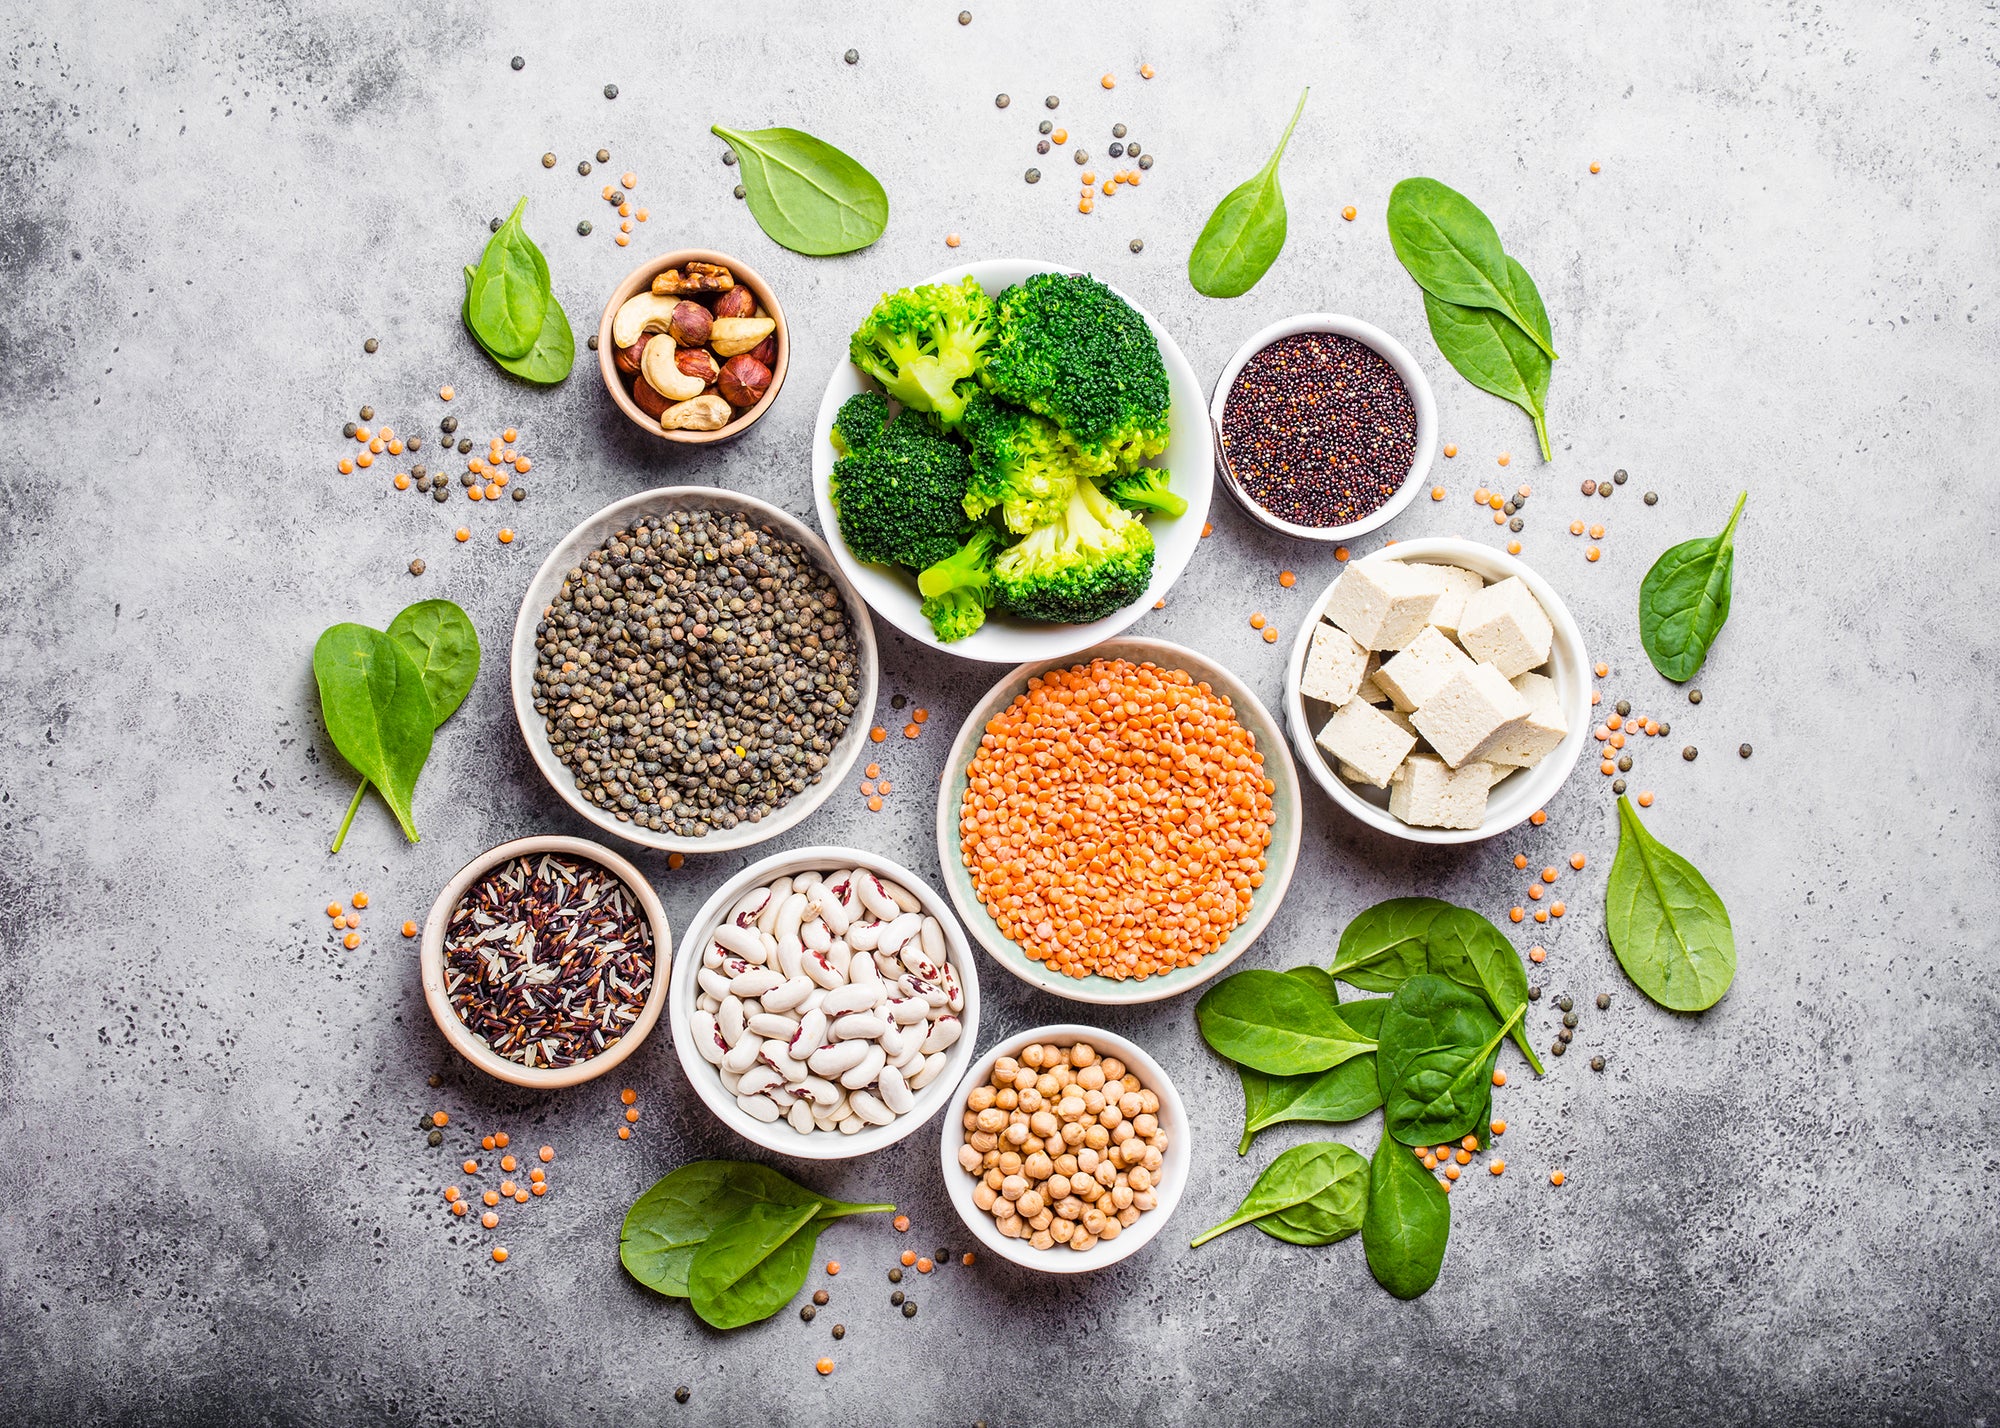 Does a vegan diet have nutrient deficiencies?